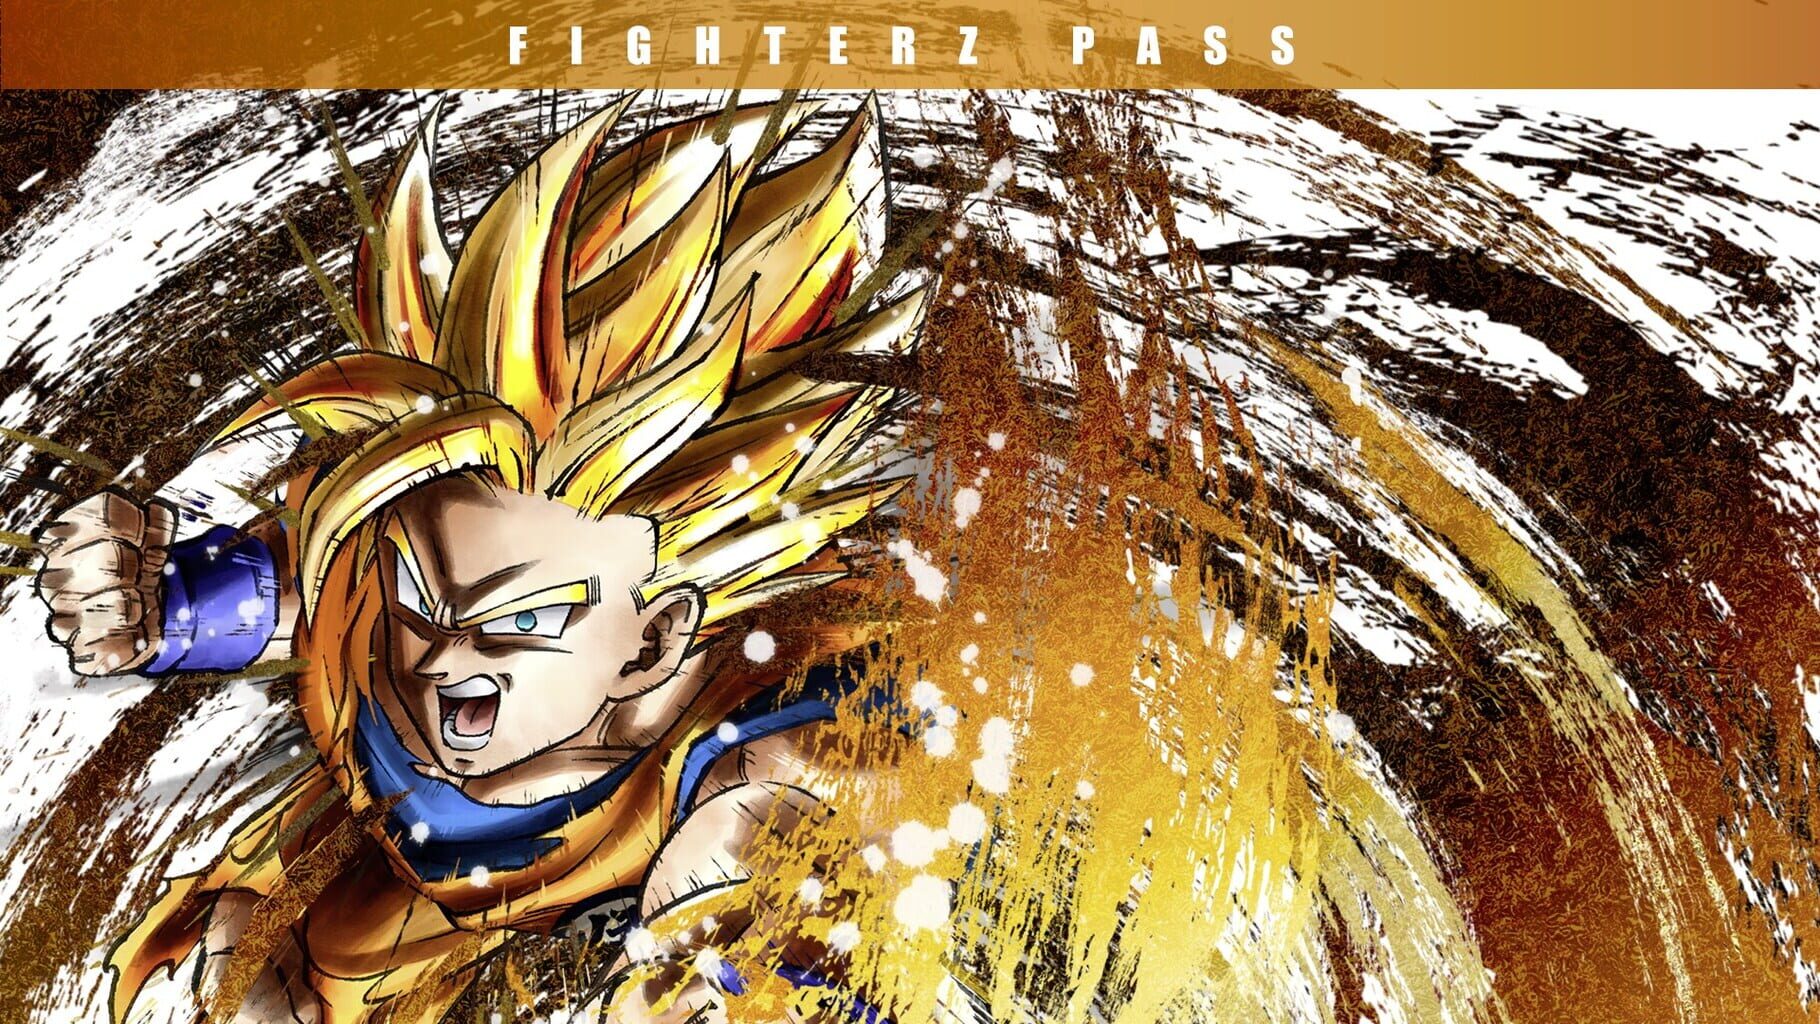 Dragon Ball FighterZ: FighterZ Pass artwork